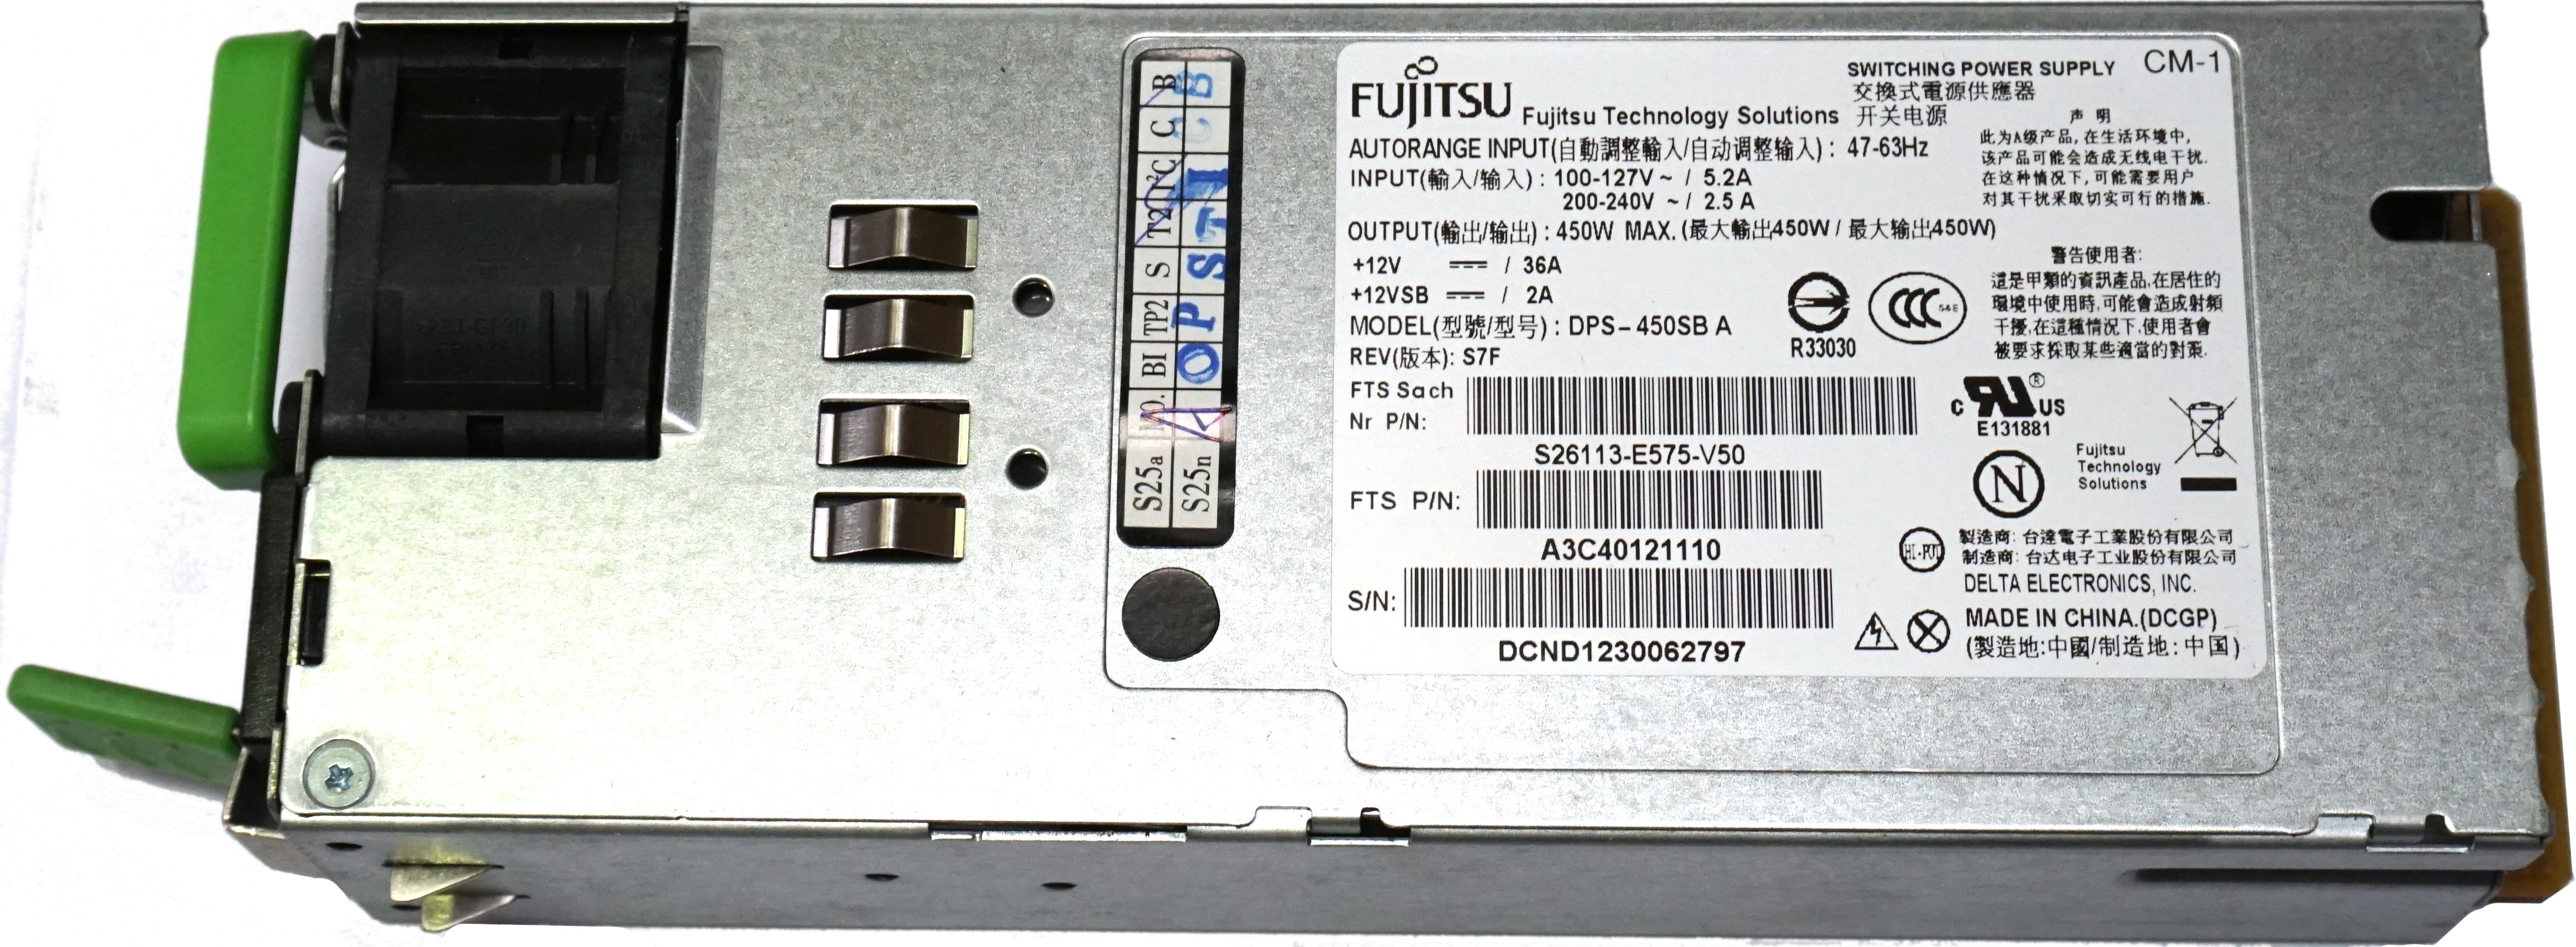 Fujitsu RX100 S7, TX300 S7, RX350 S7 PSU 450W